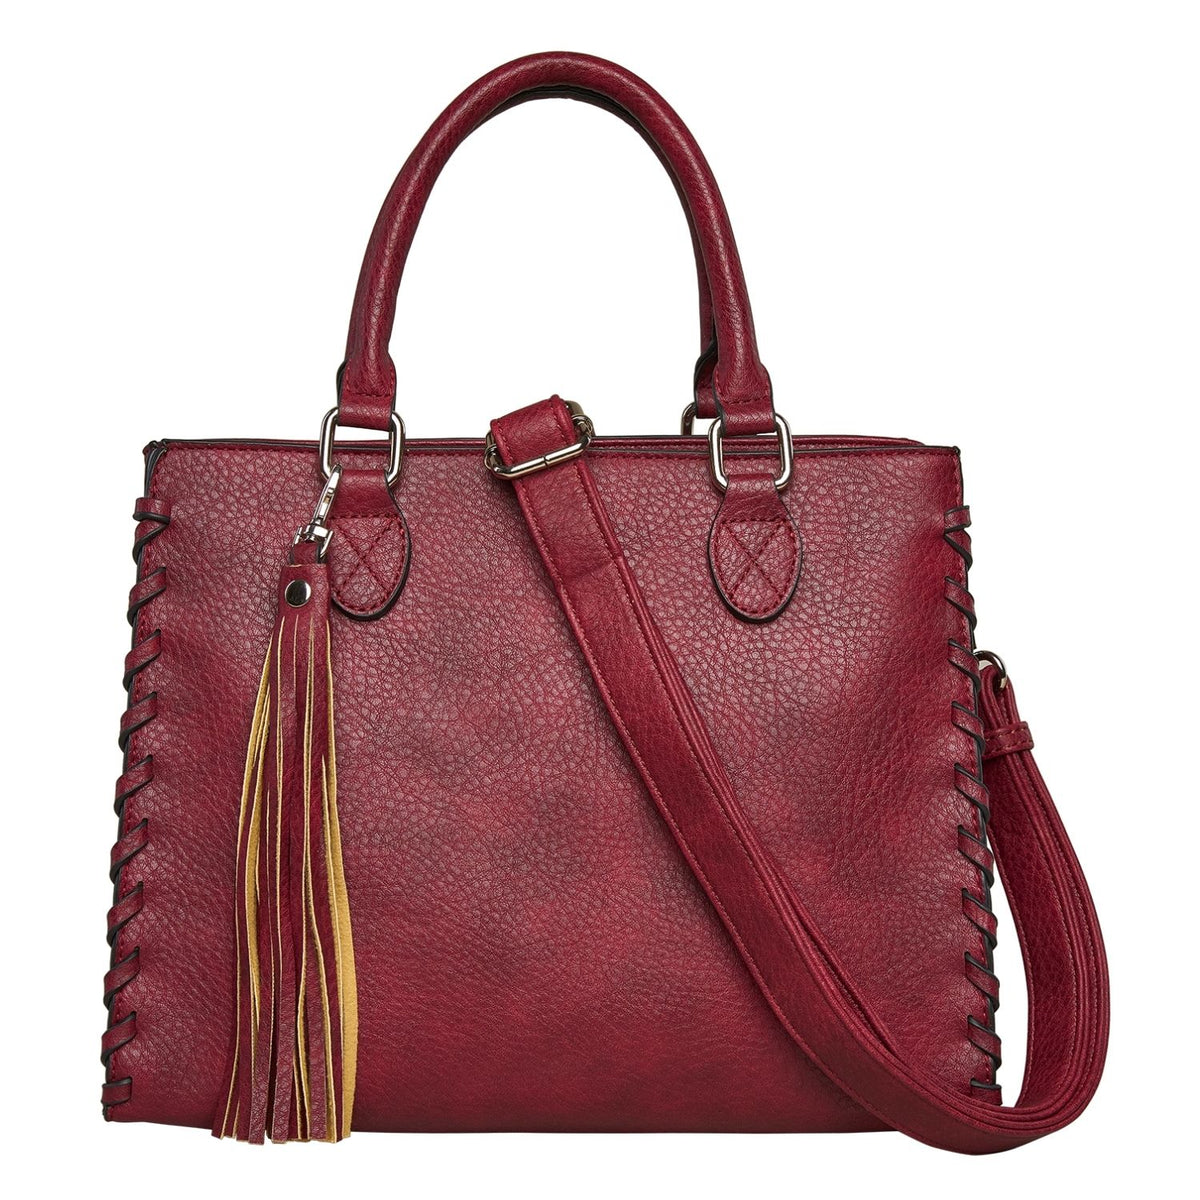 Amazon.com: Lady Conceal: Crossbody Bags